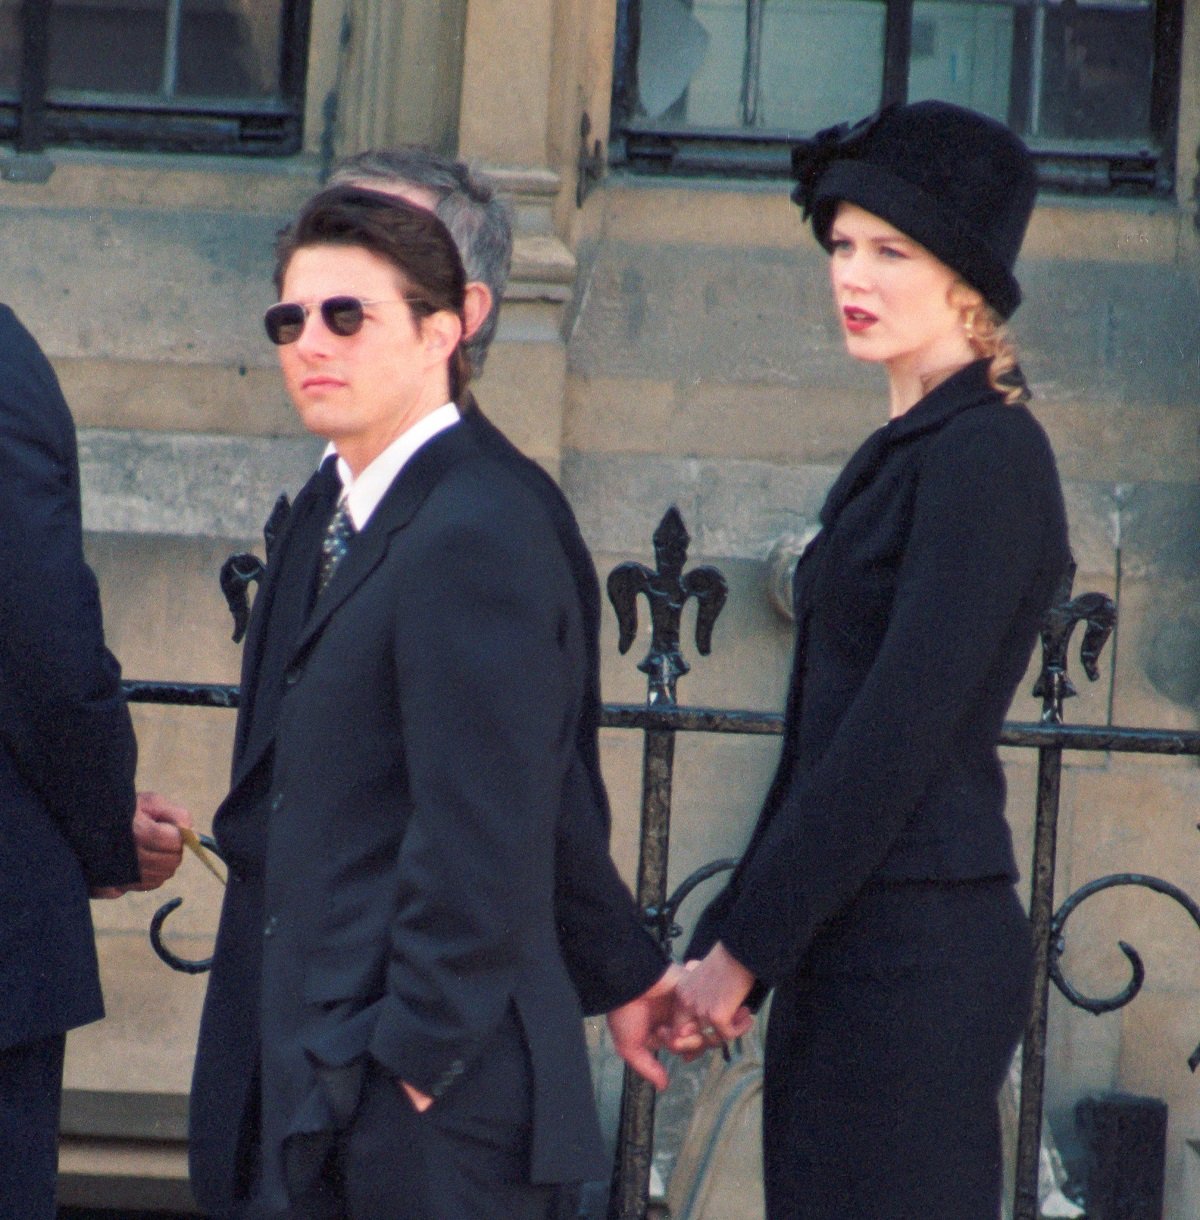 Tom Cruise and Nicole Kidman arrive at Princess Diana's funeral